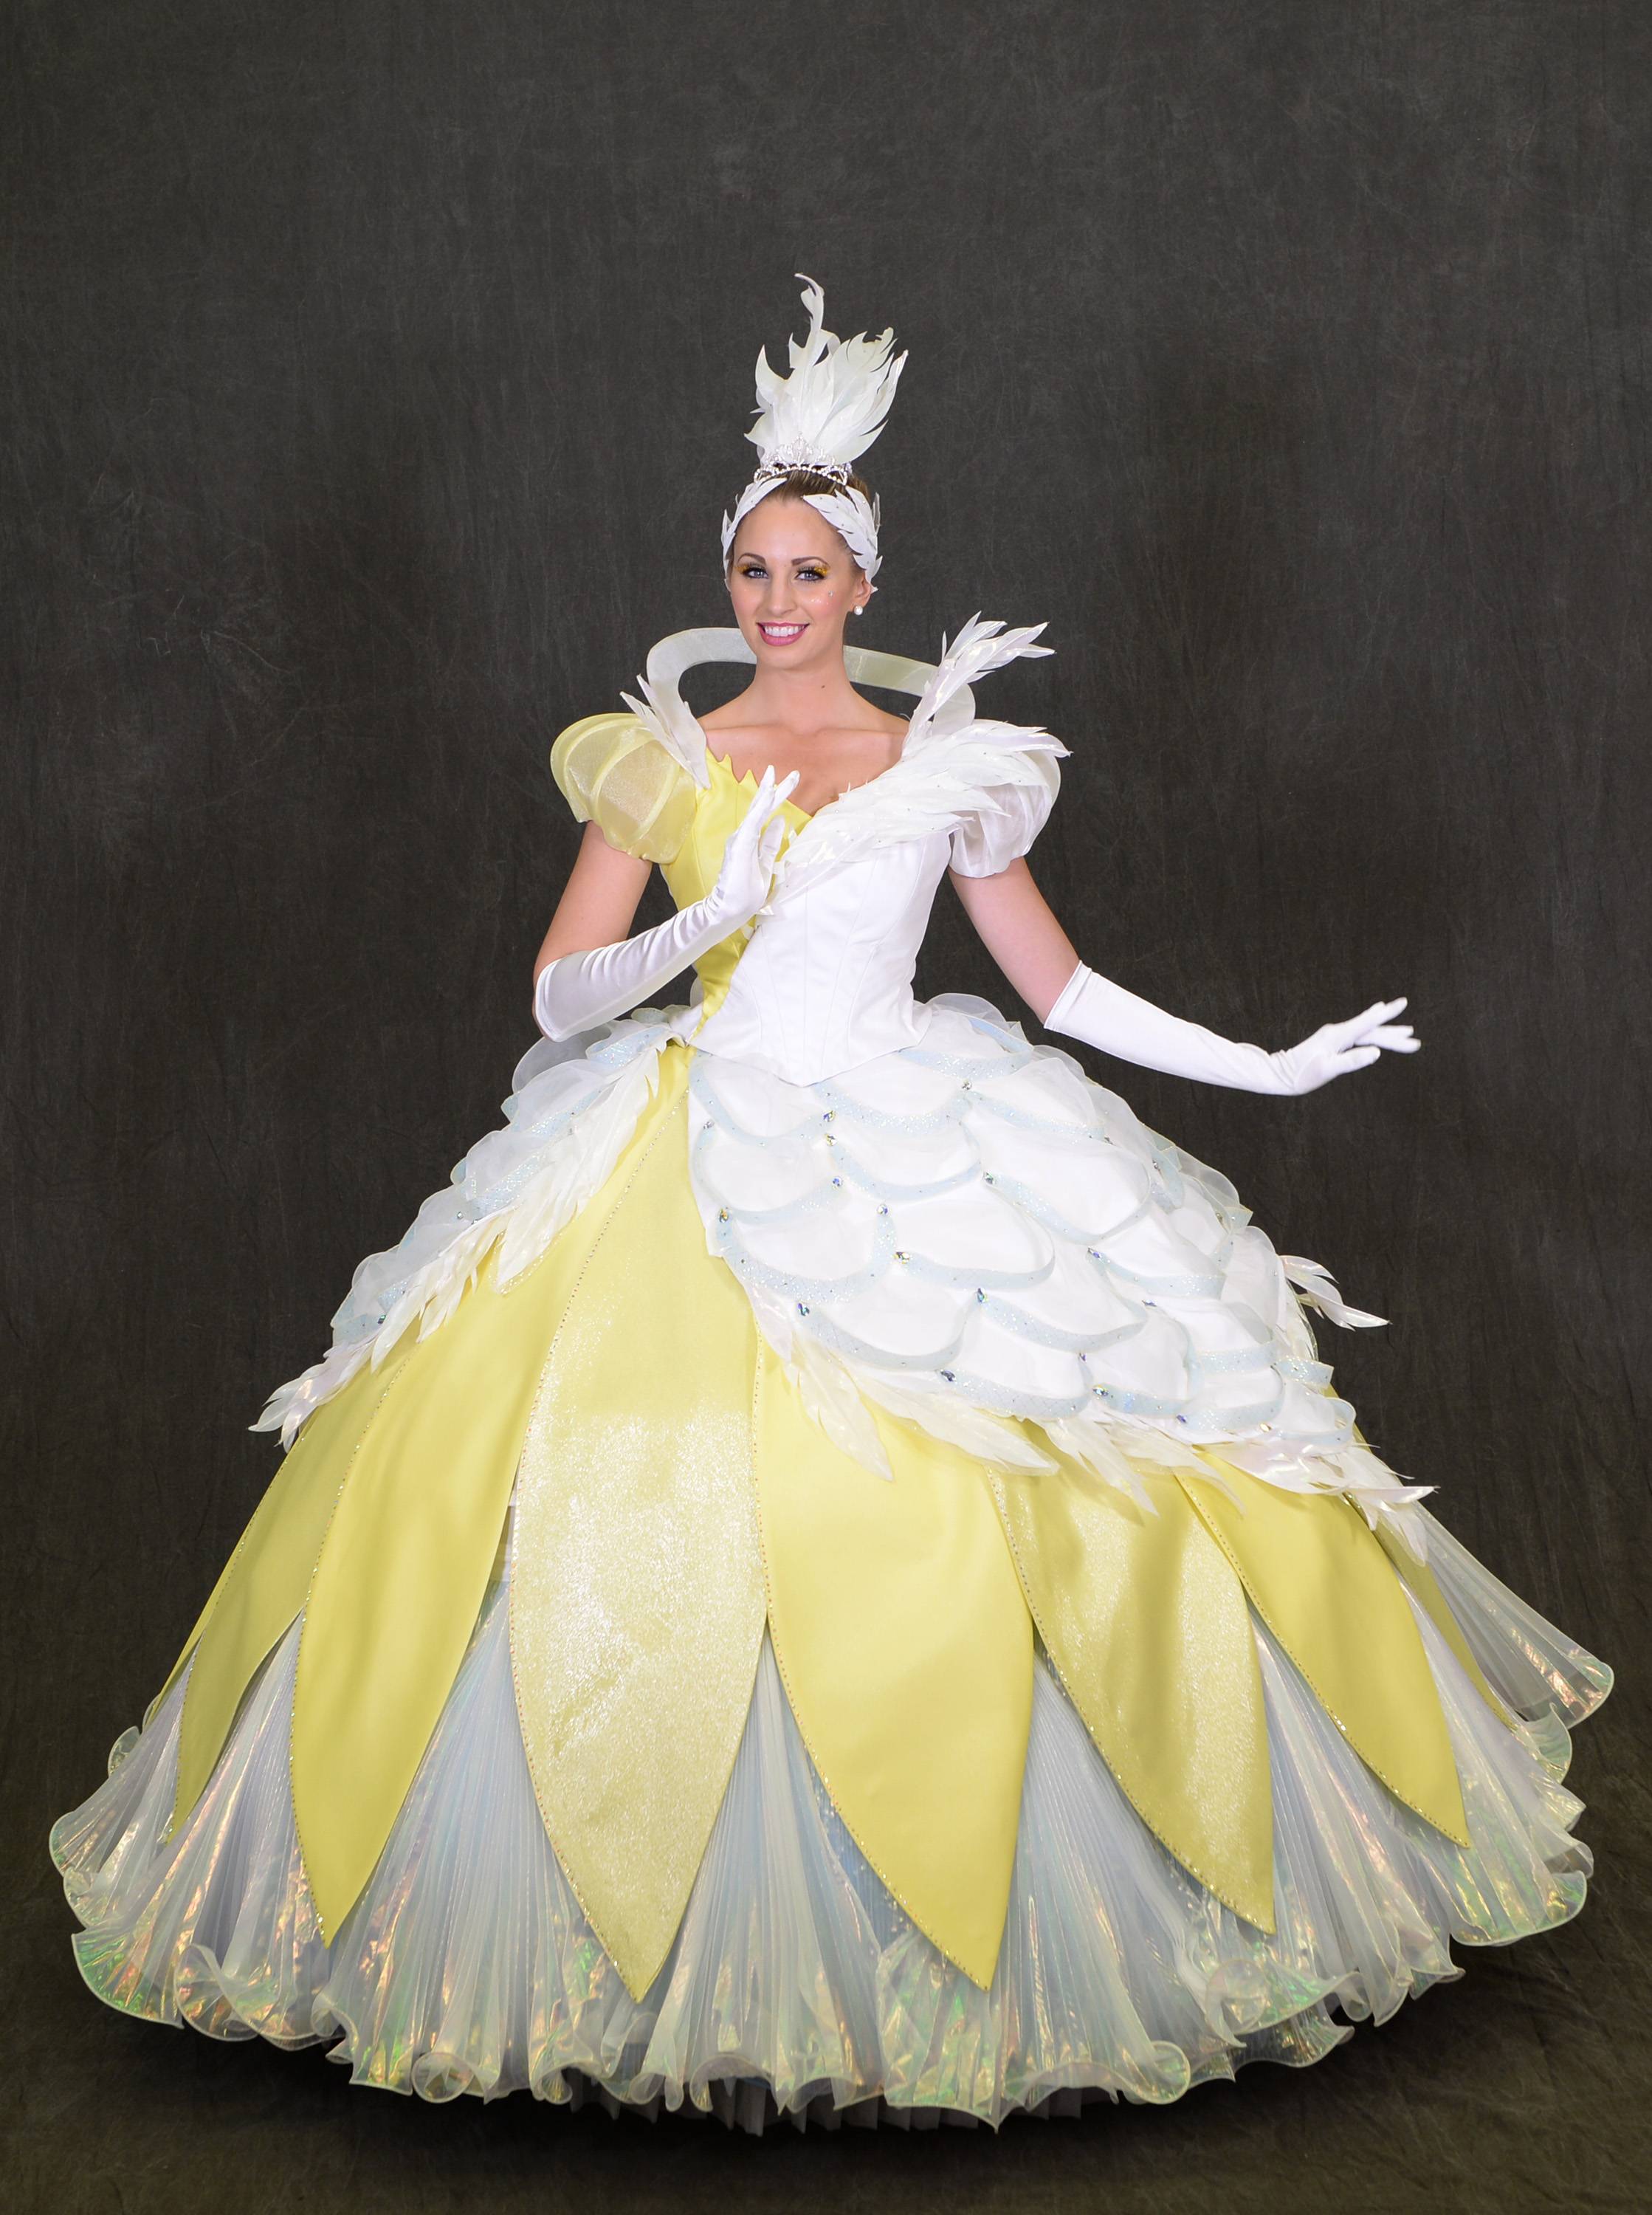 Disney Festival of Fantasy Parade Costumes - Swan Court